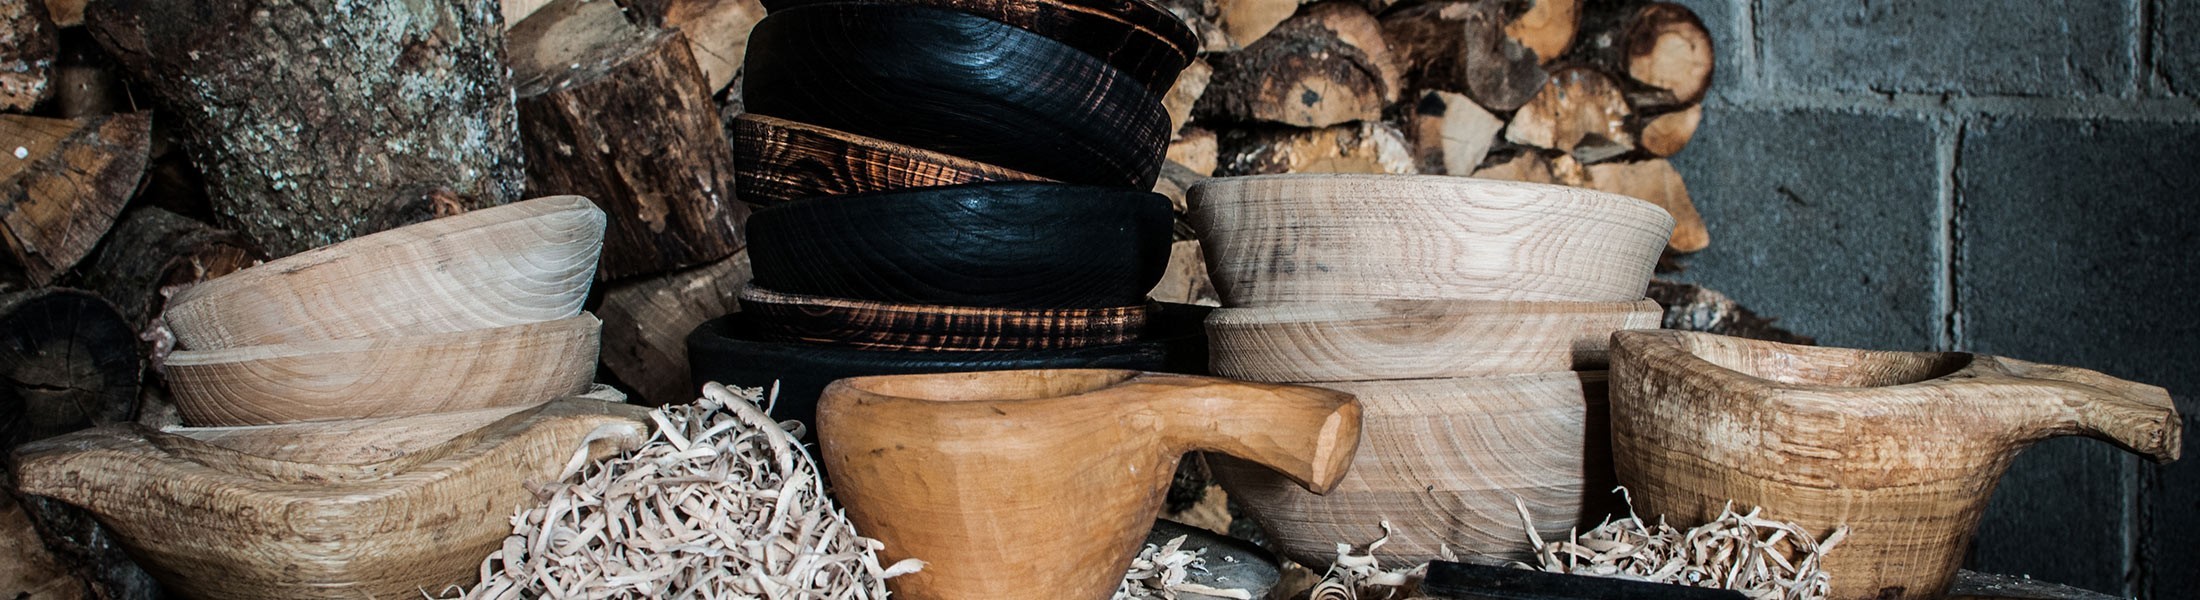 Tête de Bois | Bol en bois artisanal